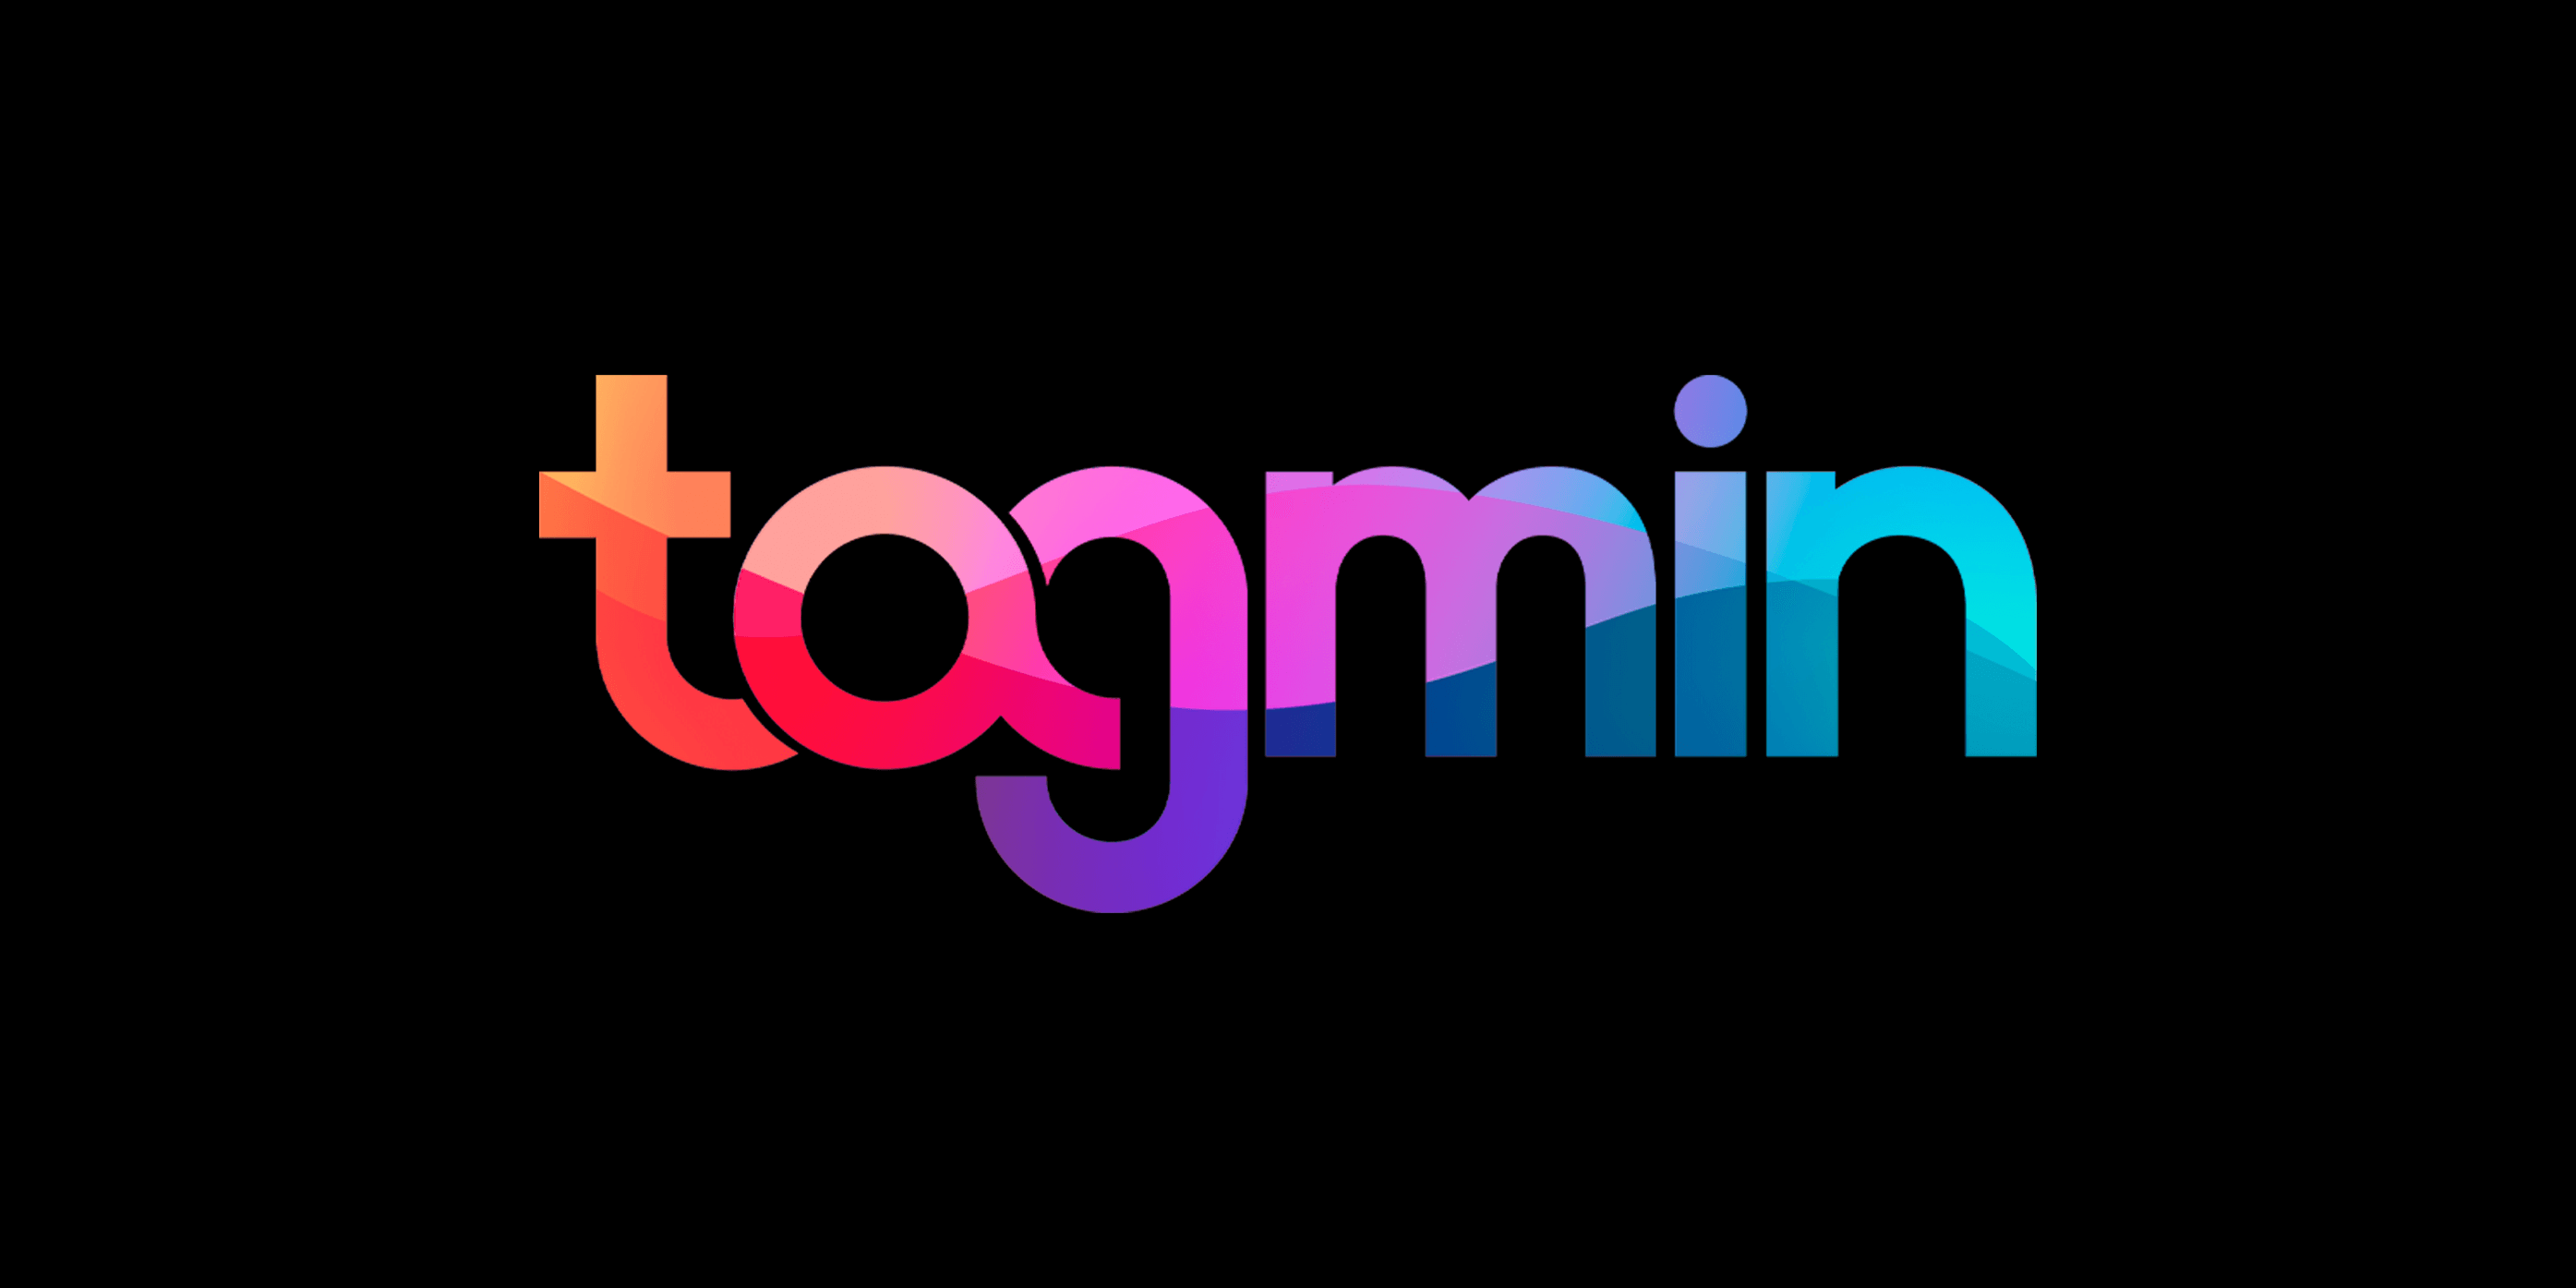 Tagmin logo on a black background.